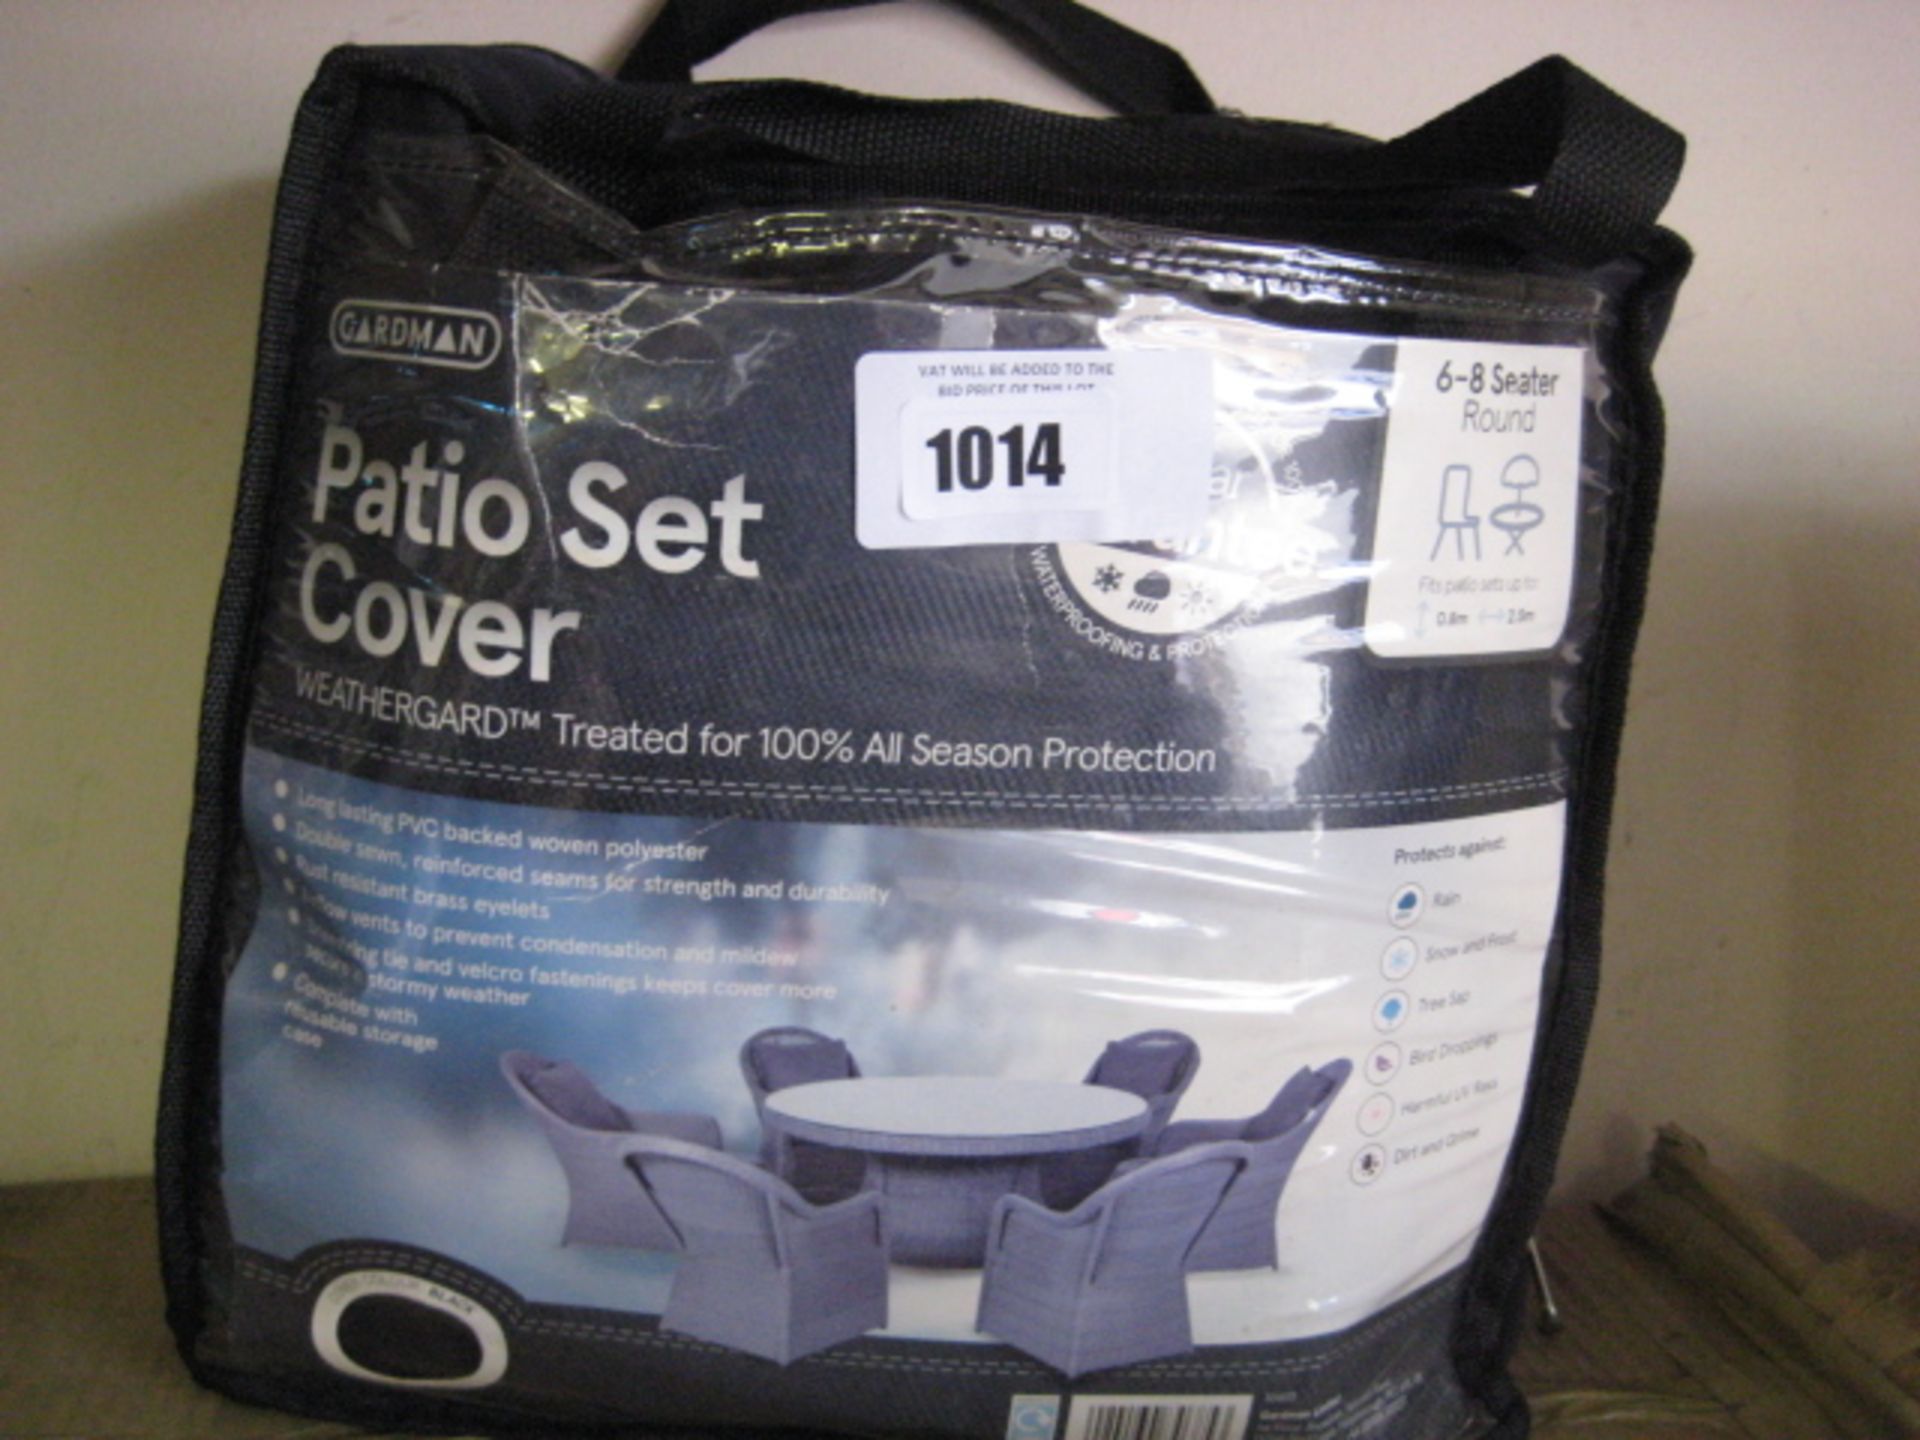 Gardman 6-8 seater patio set cover